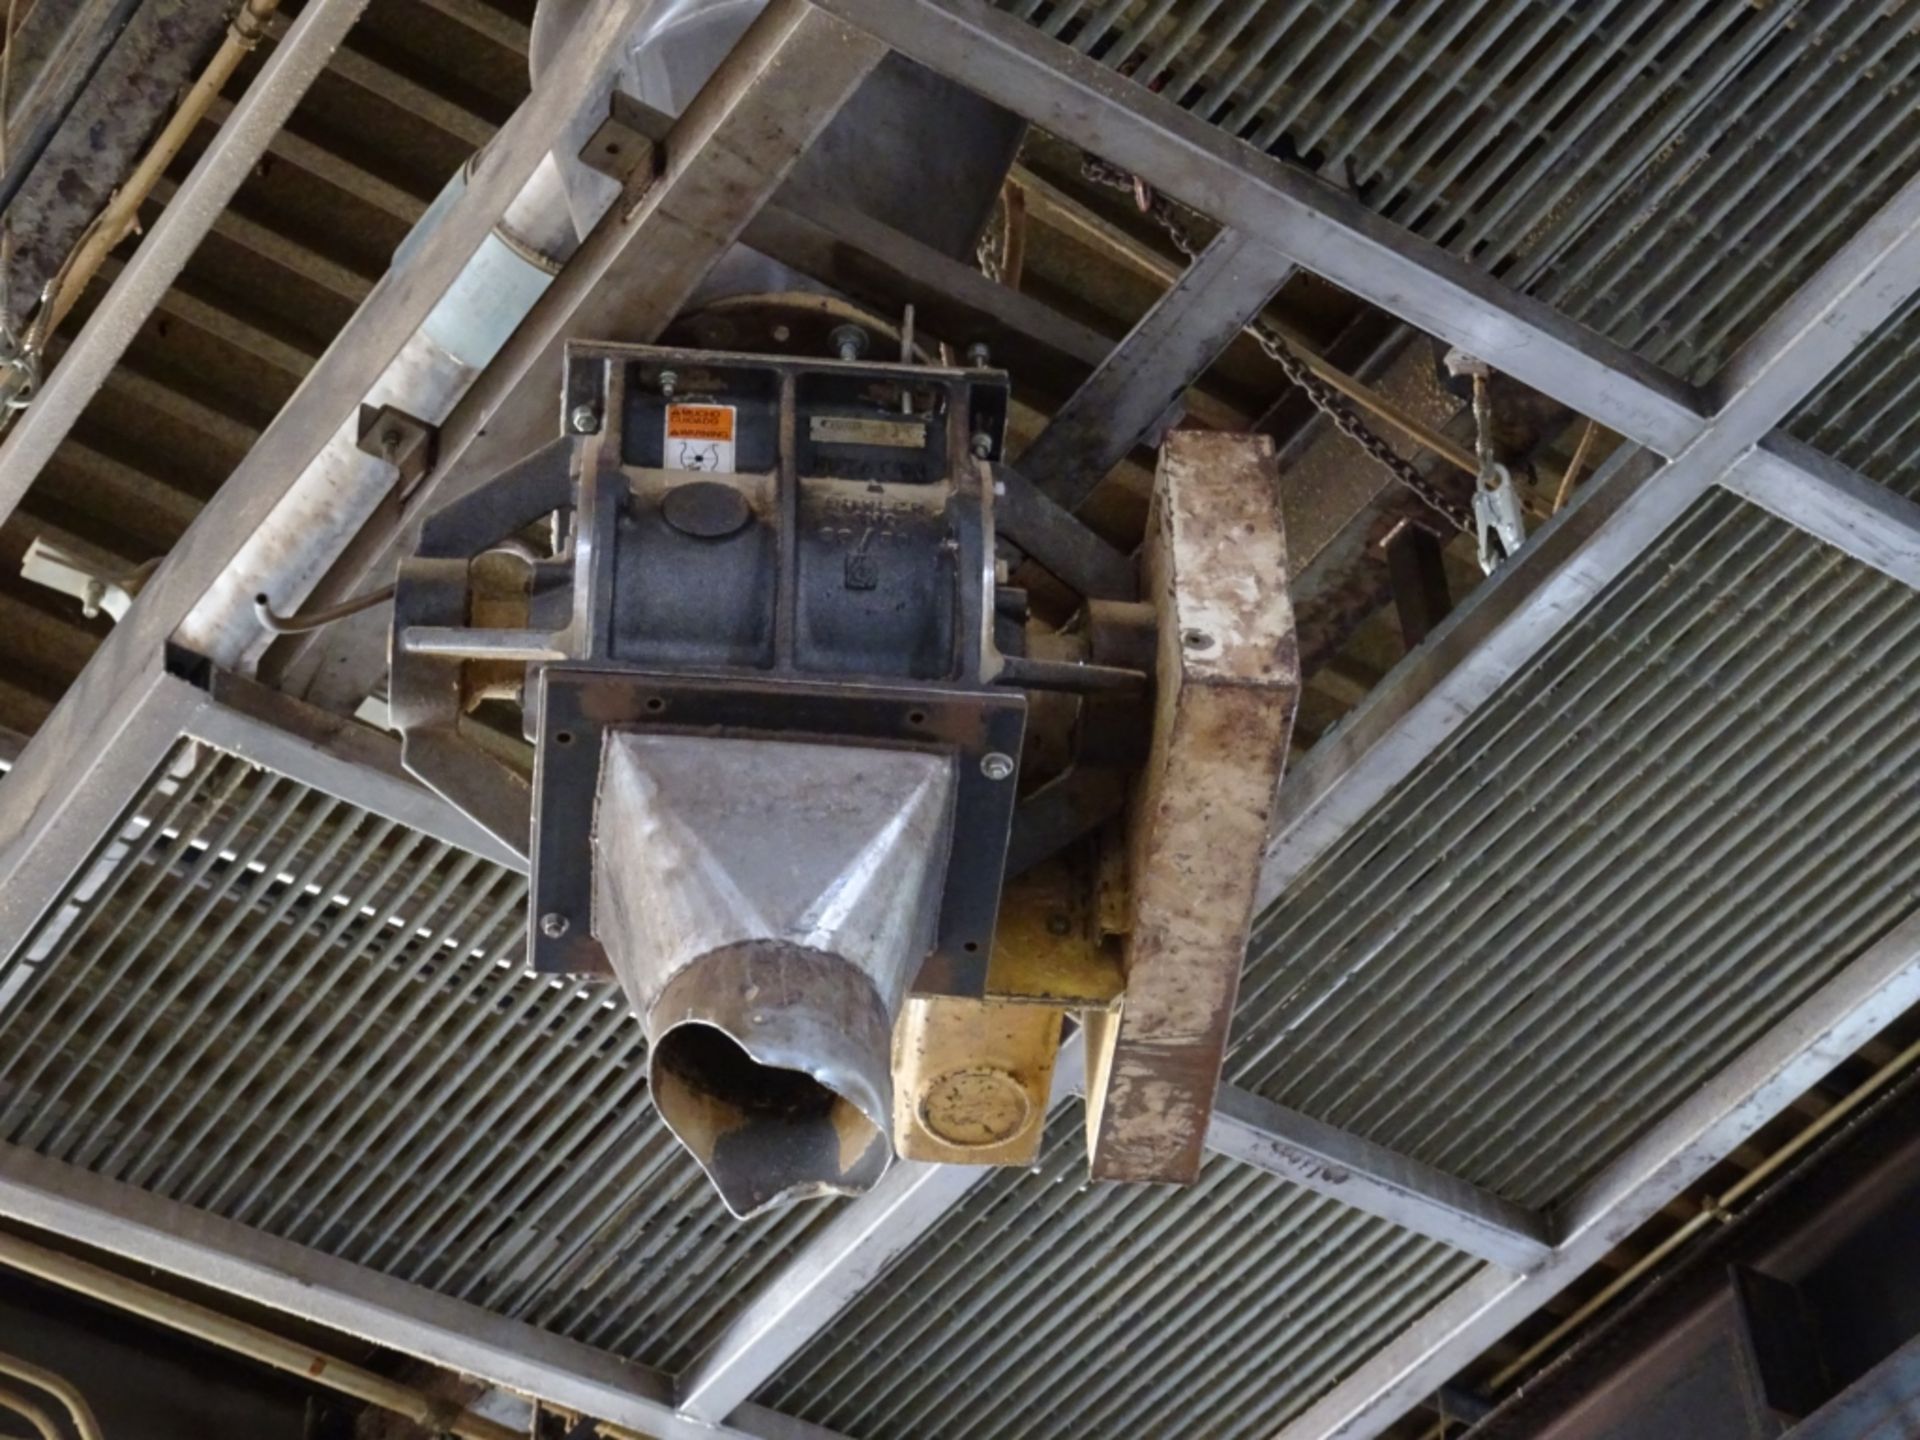 Buhler 32x32"x10' Airlock Material Drying Bin sn 54980948 w/ Associated Blow Motor, Material Feed - Image 16 of 19